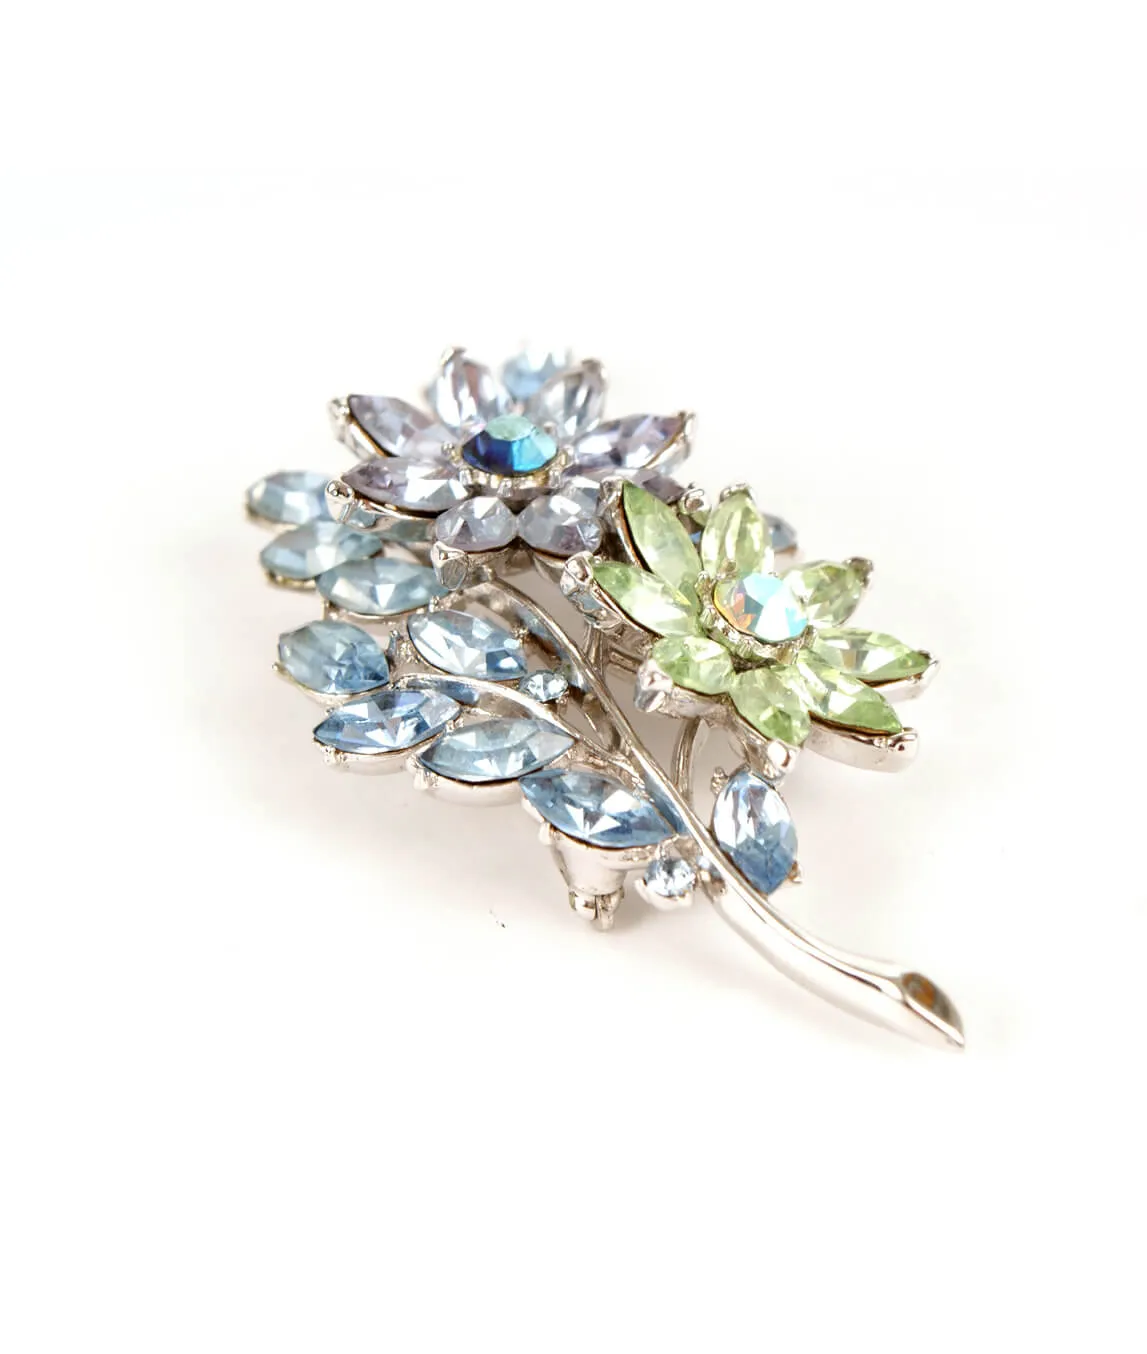 Blue and green crystal Trifari brooch 1950s